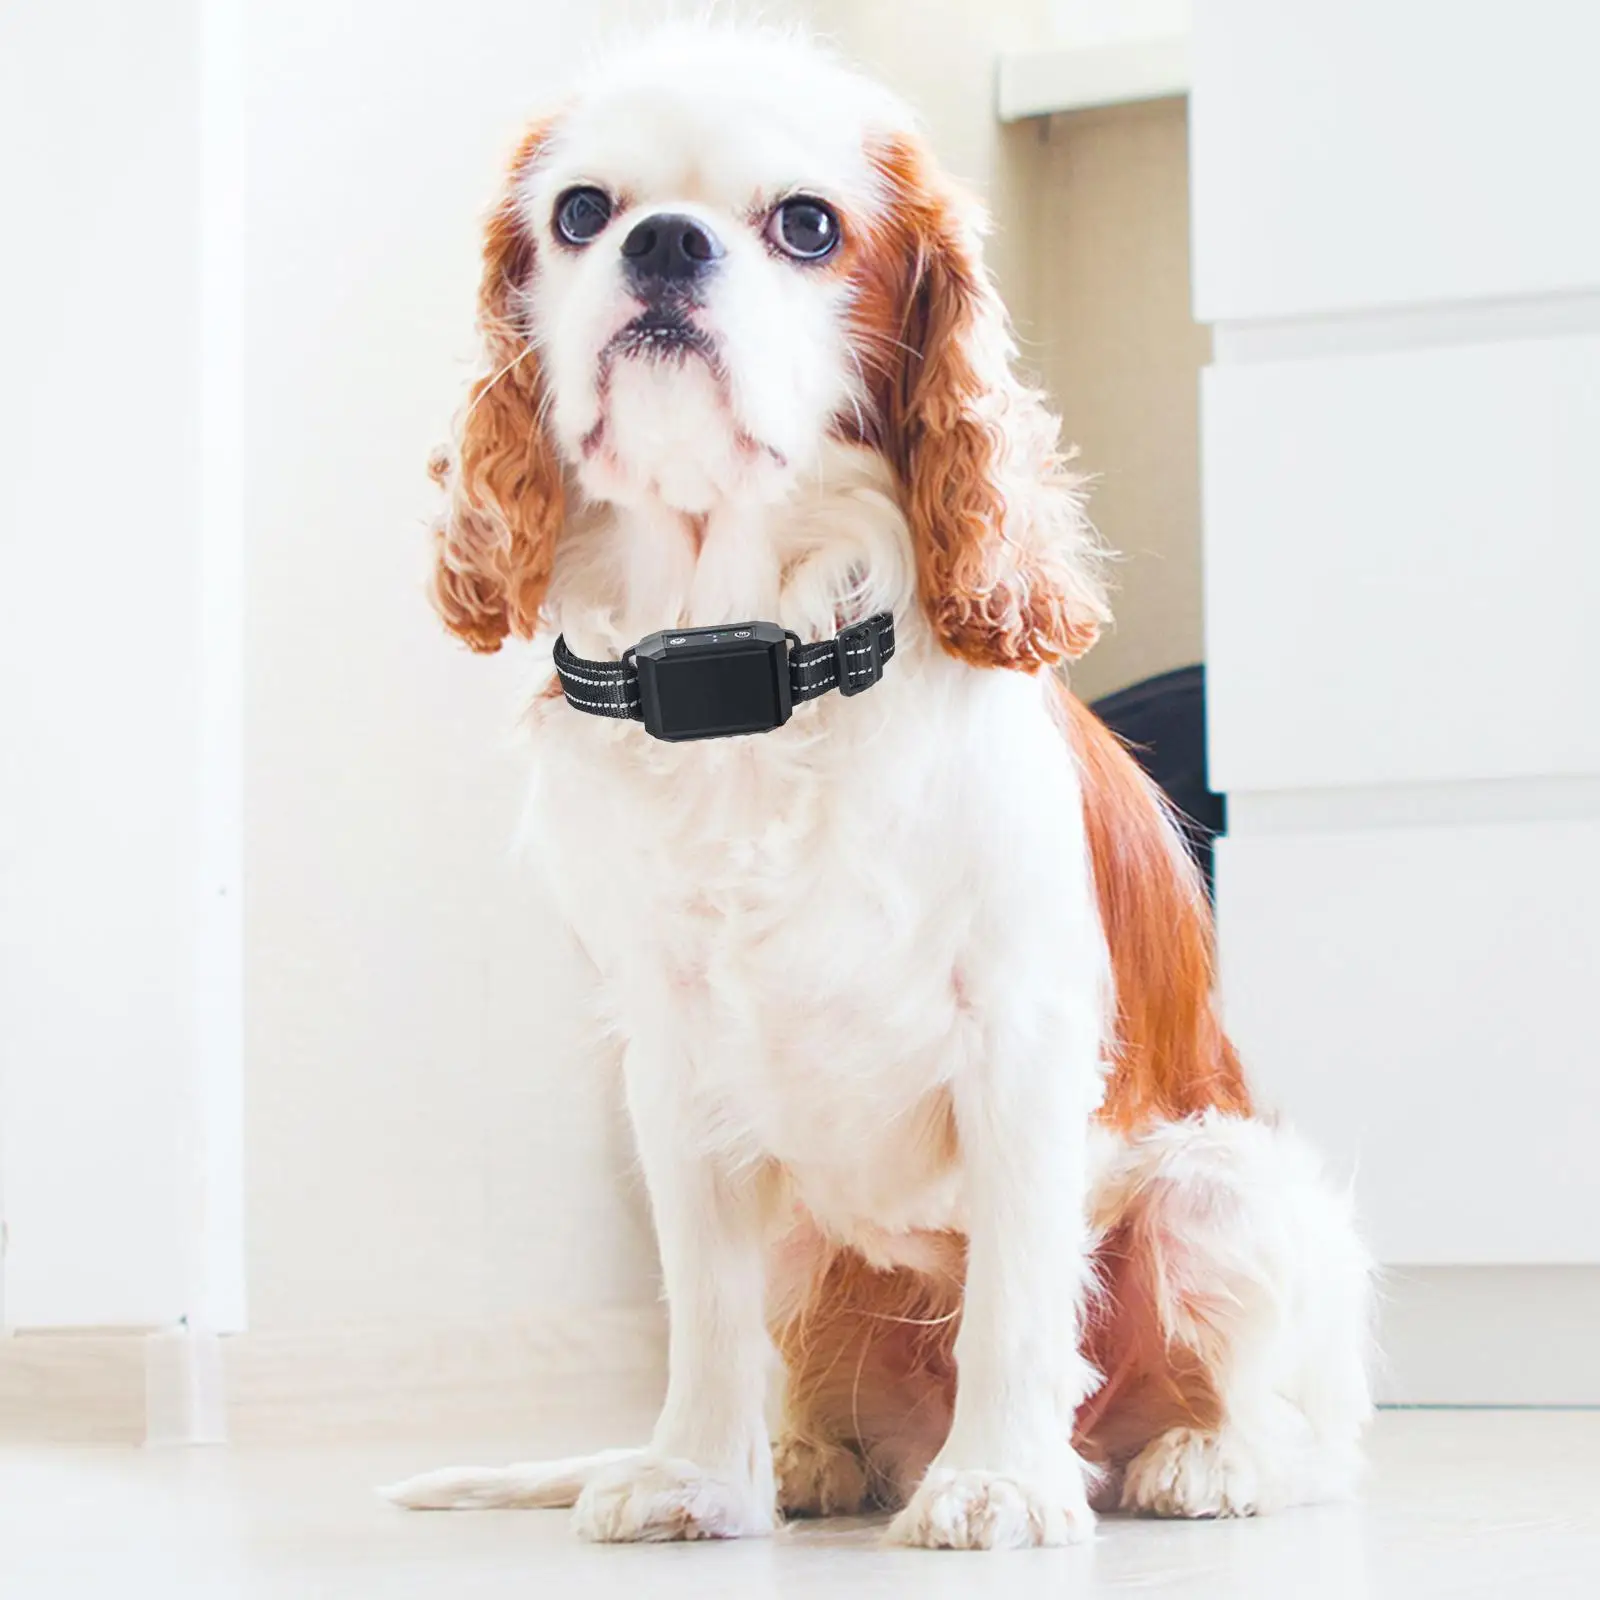 Electric Dog Anti Bark Collar Stop Barking Dog Trainer shock Vibration Adjustable Strap for Dog Dog Training Small Medium